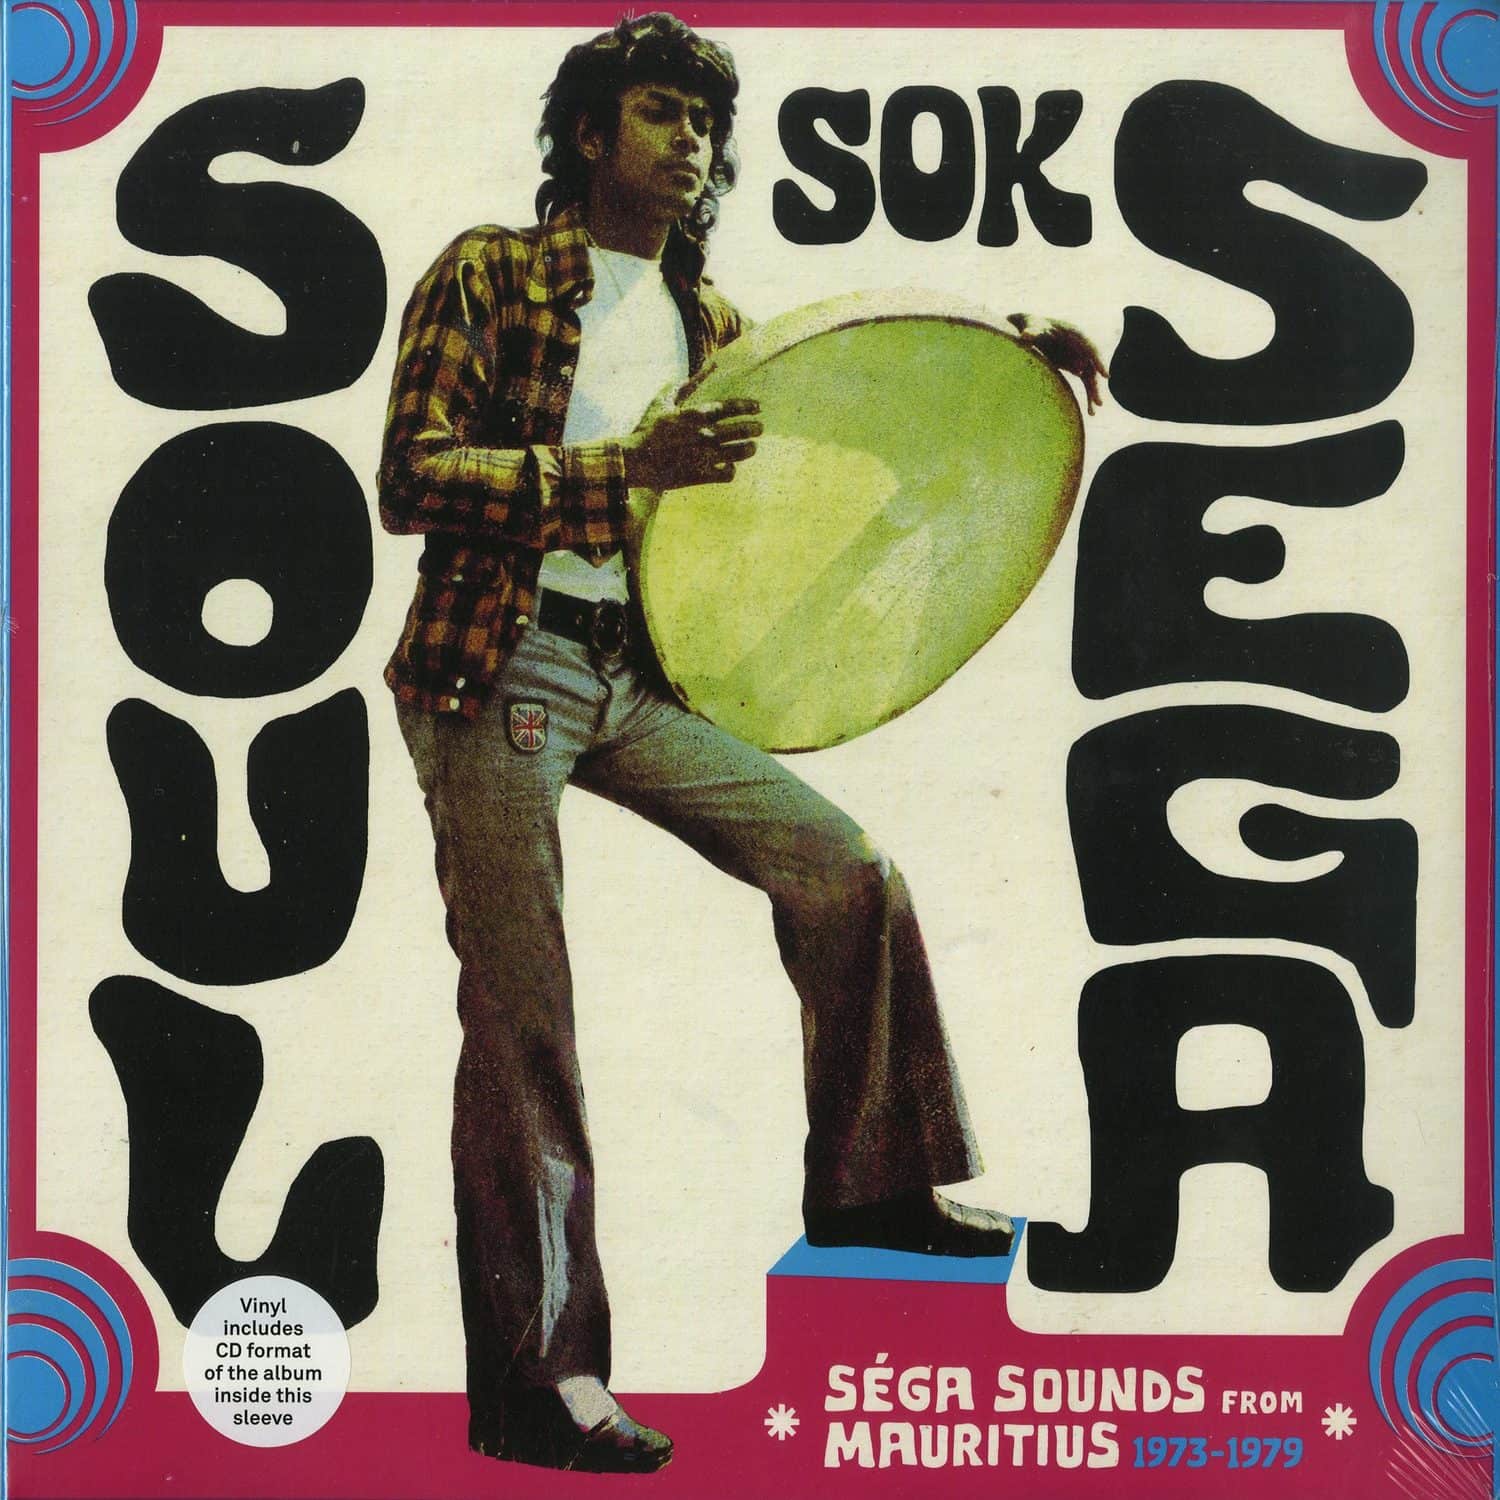 Various Artists - SOUL SOK SEGA 